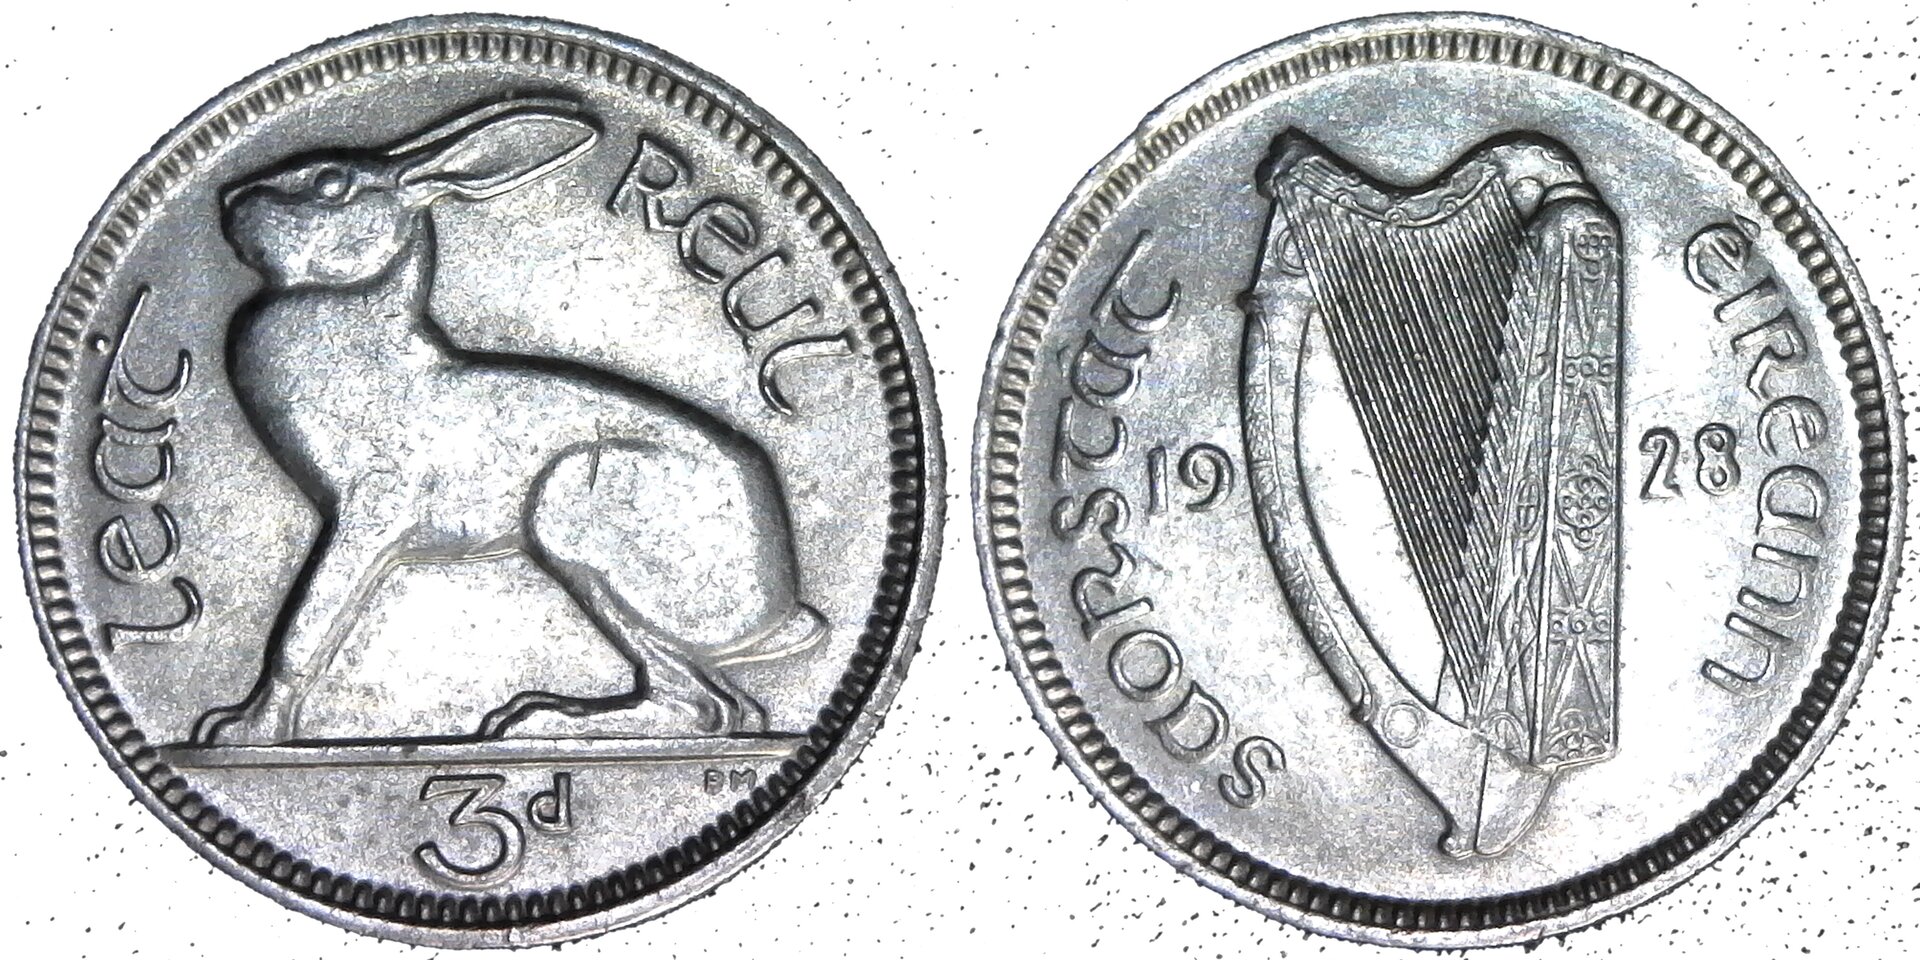 Ireland 3 Pence 1928 obverse-side-cutout.jpg